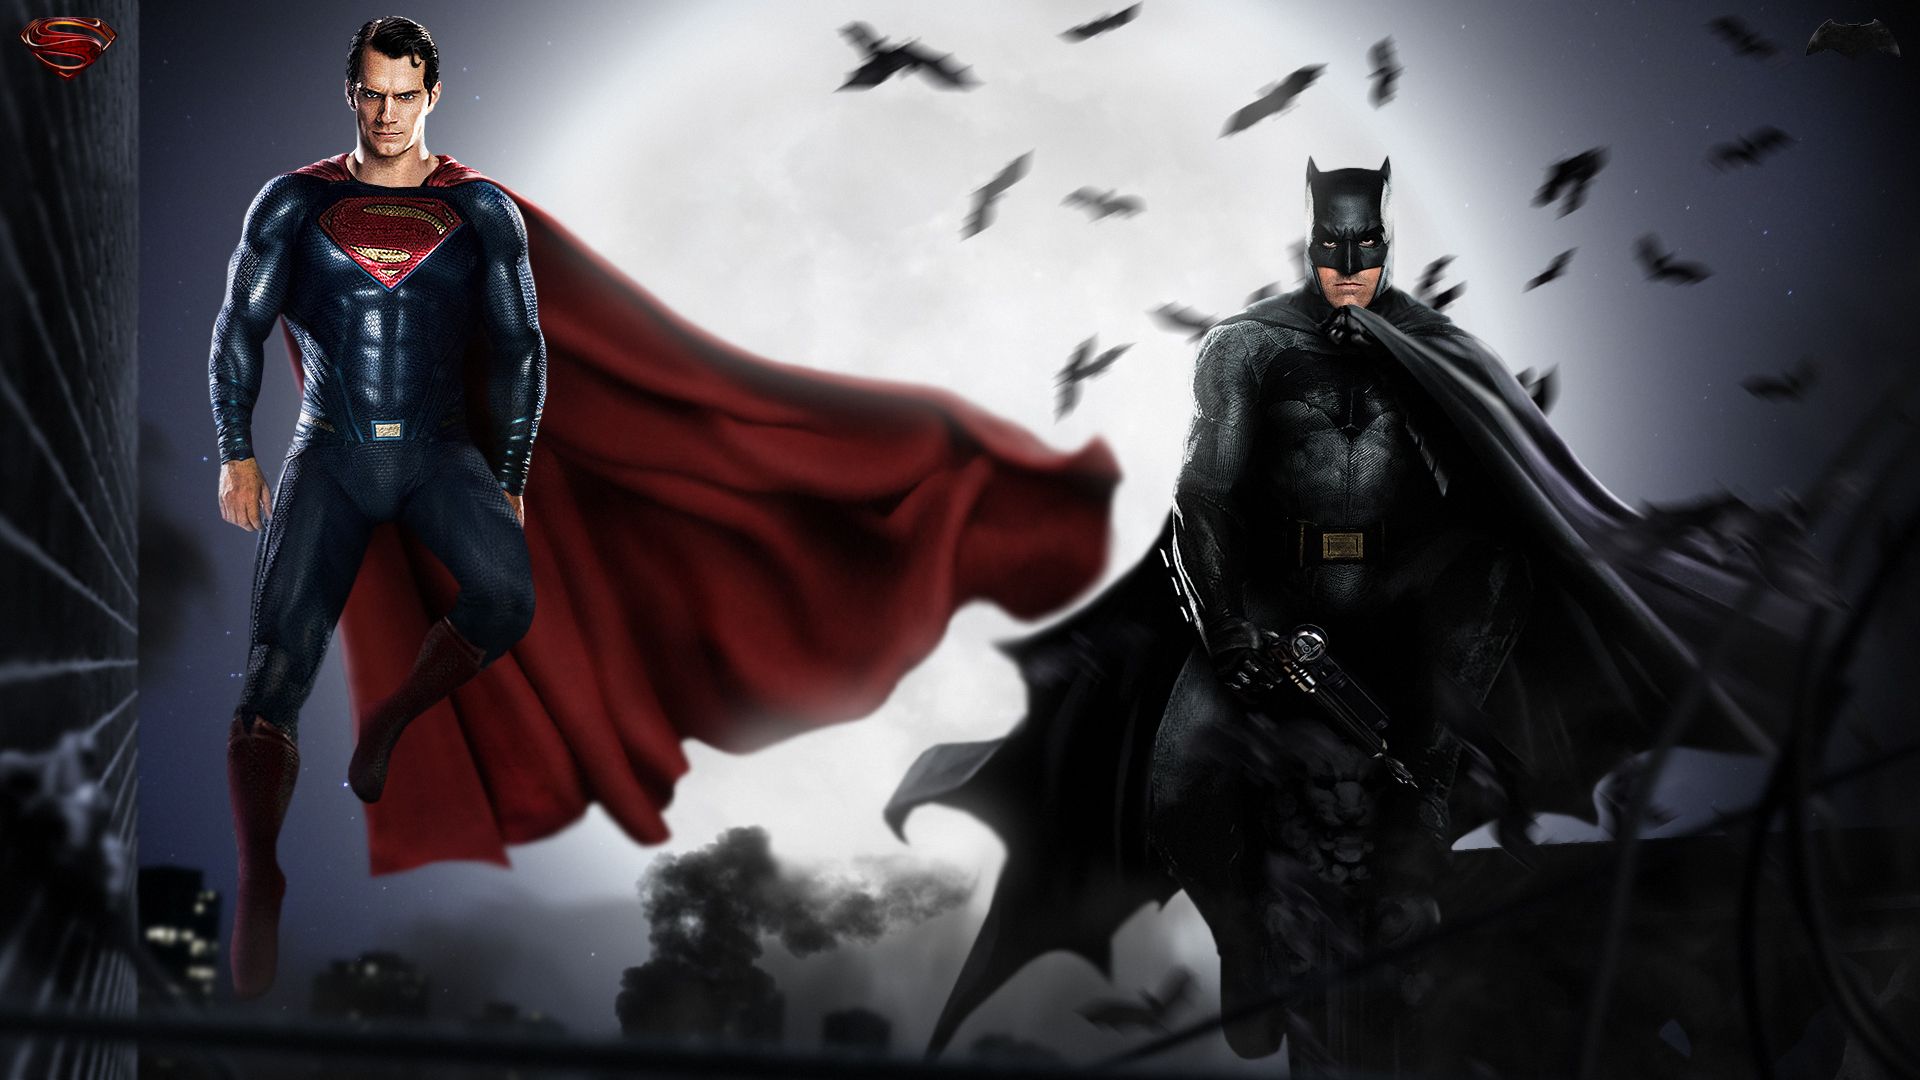 Batman vs Superman HQ Wallpapers | Full HD Pictures